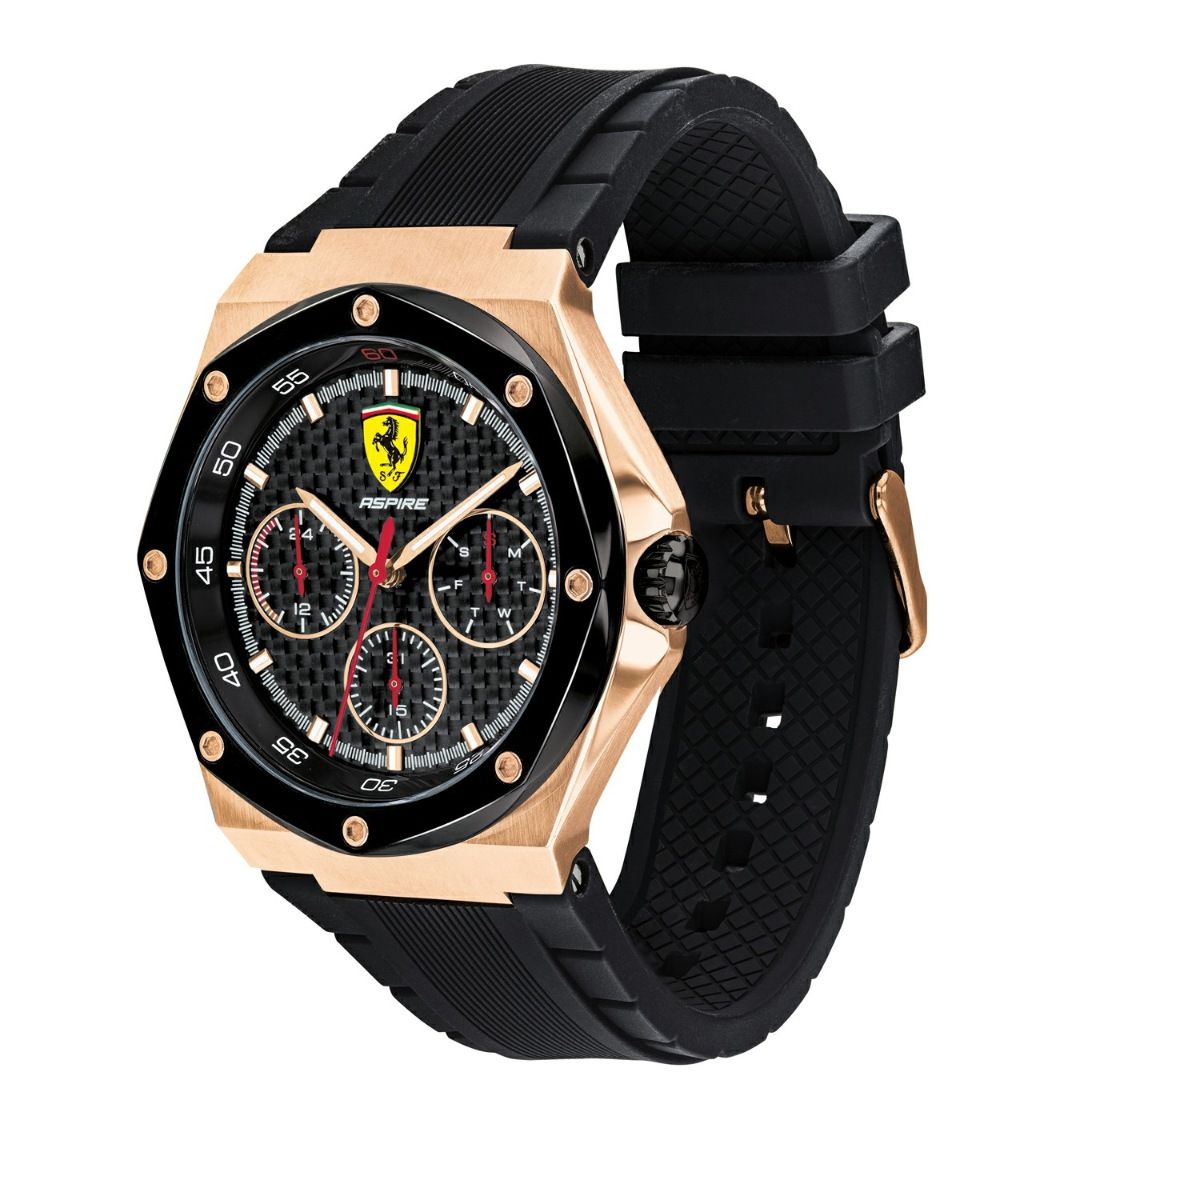 Ferrari 830536 Aspire Quartz Rose Gold Metal Watch Men price in Bahrain,  Buy Ferrari 830536 Aspire Quartz Rose Gold Metal Watch Men in Bahrain.